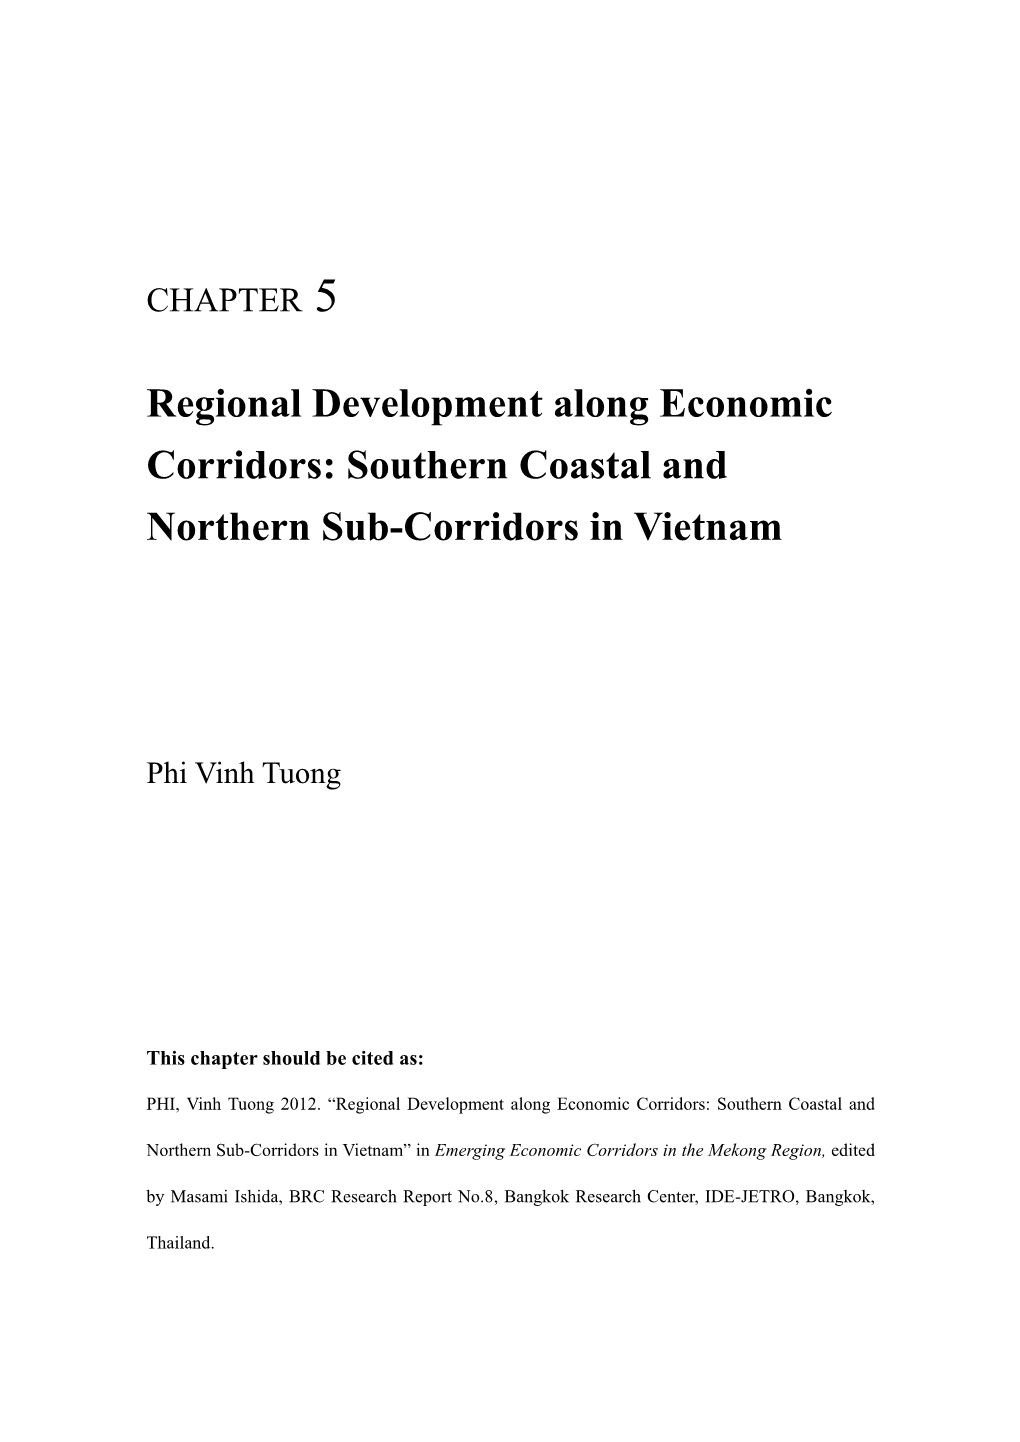 Regional Development Along Economic Corridors: Southern Coastal and Northern Sub-Corridors in Vietnam